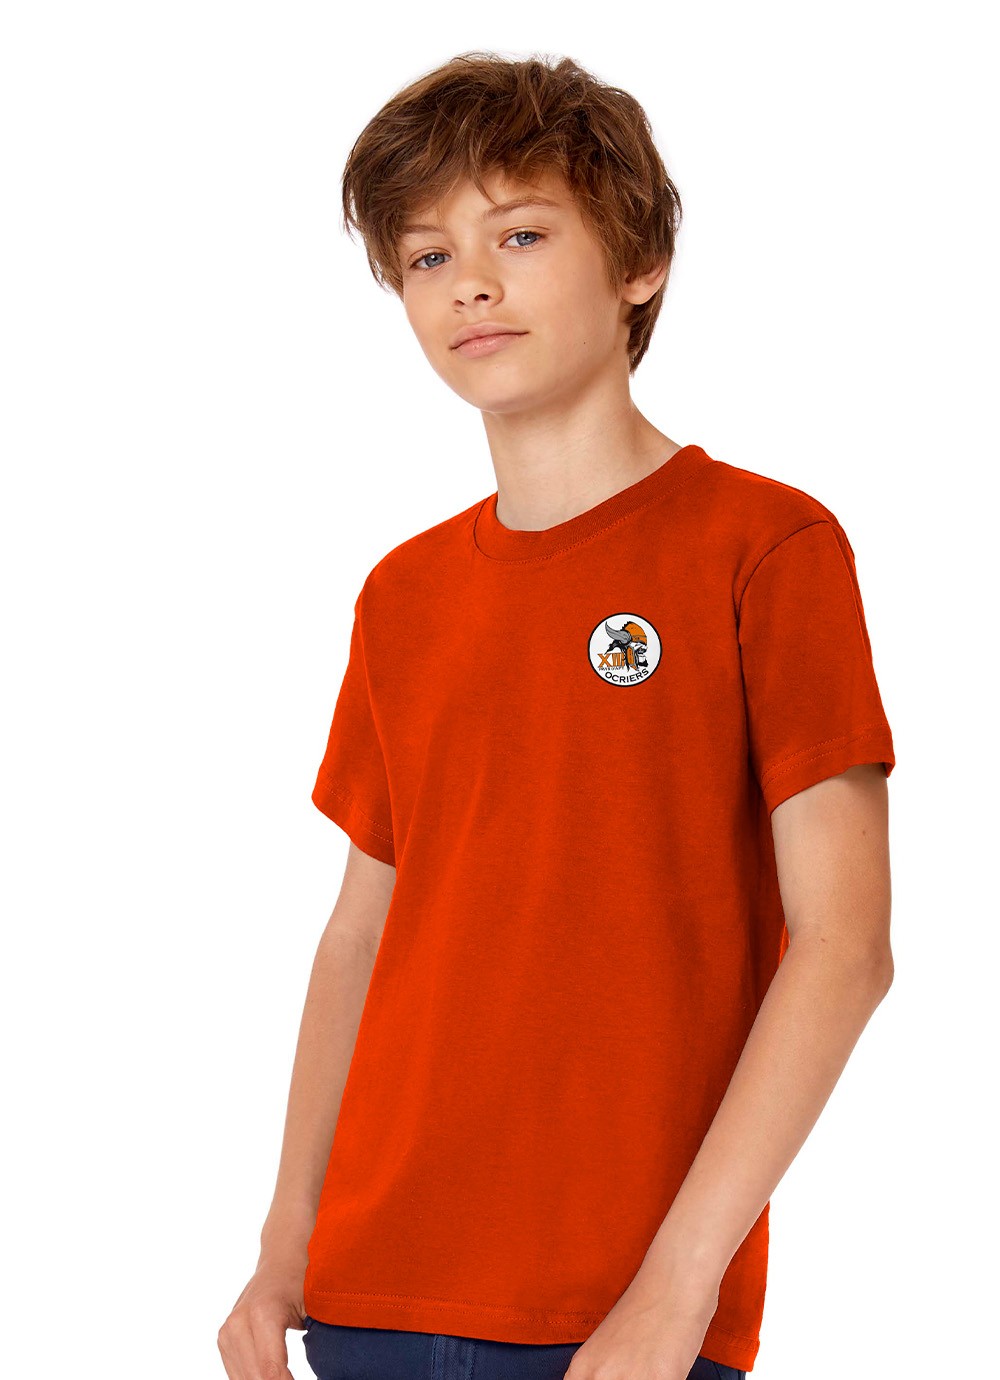 Tshirt enfant Ocriers du Pays d'Apt orange